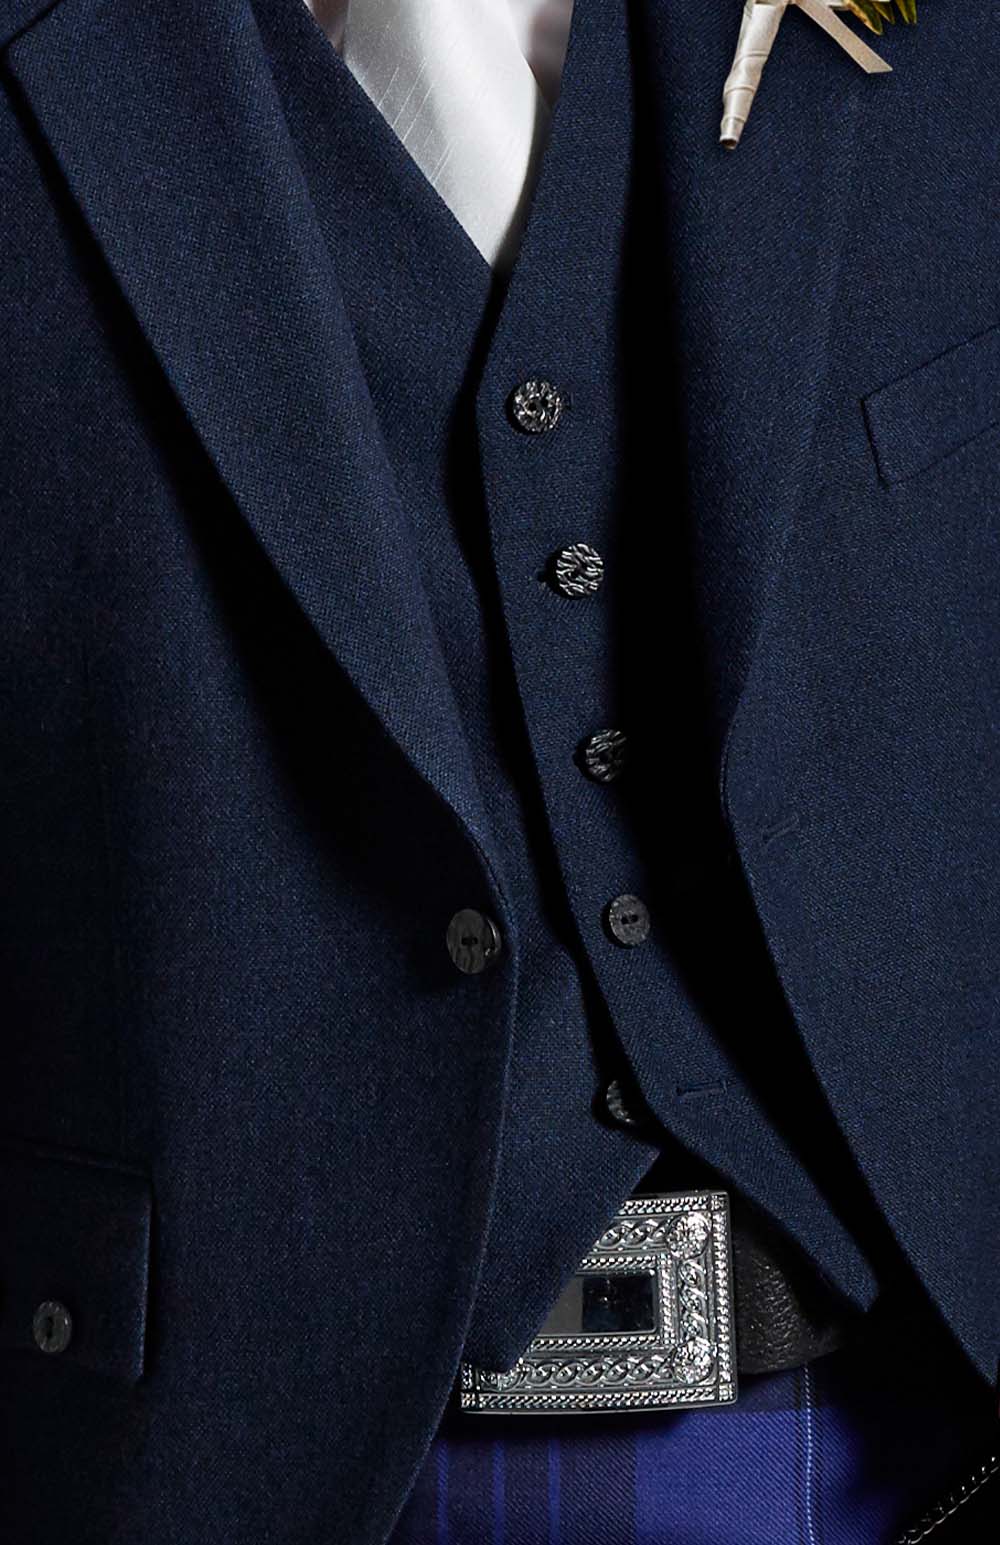 5-Button Navy Tweed Waistcoat - Gilt Edged